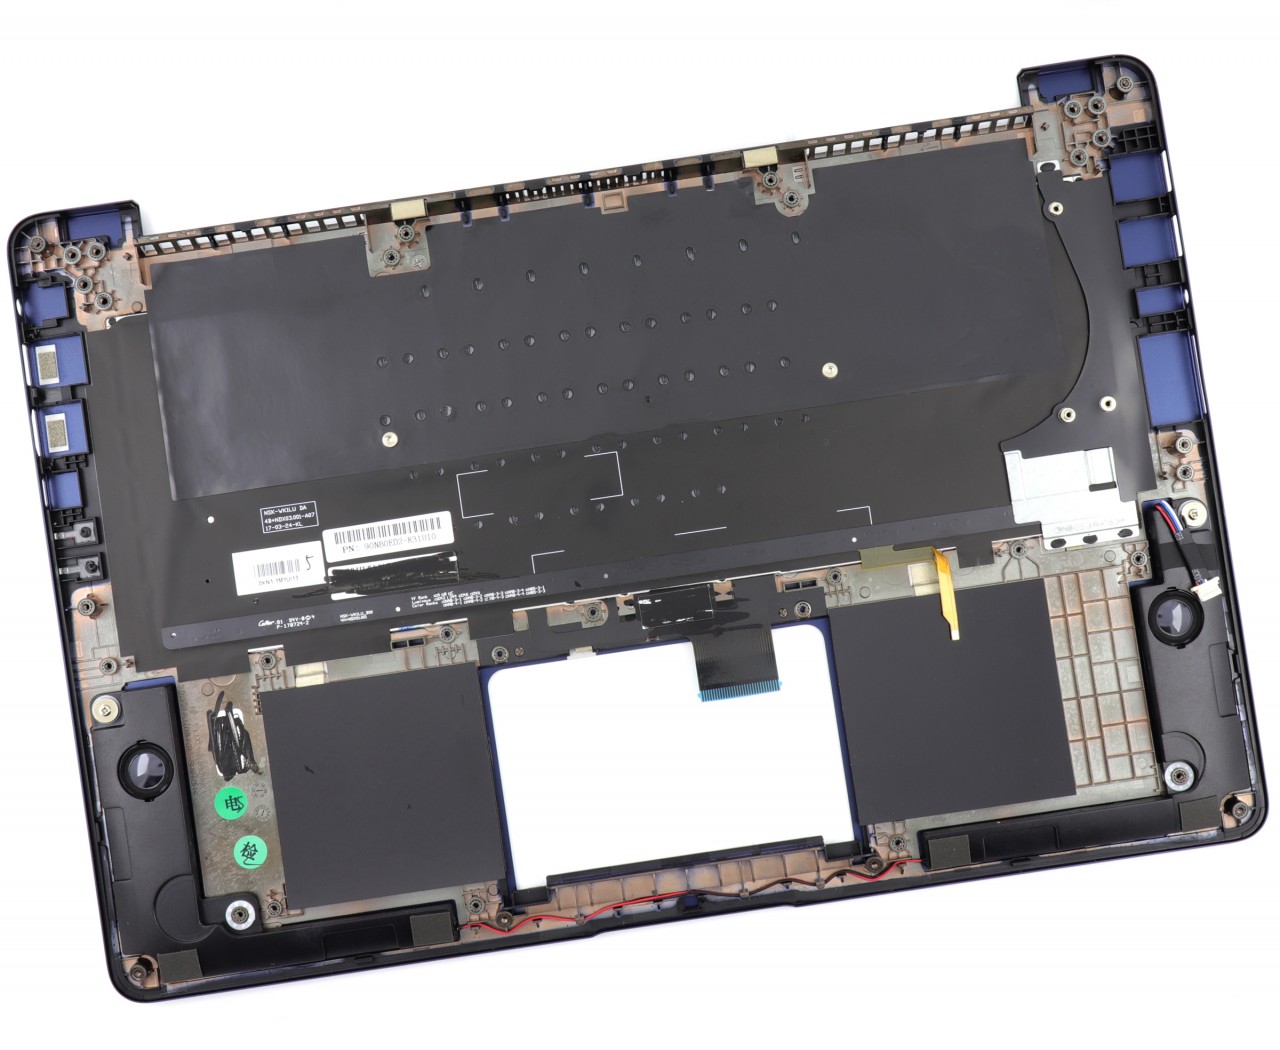 Tastatura Asus ZenBook UX530U Neagra cu Palmrest Albastru Inchis iluminata backlit